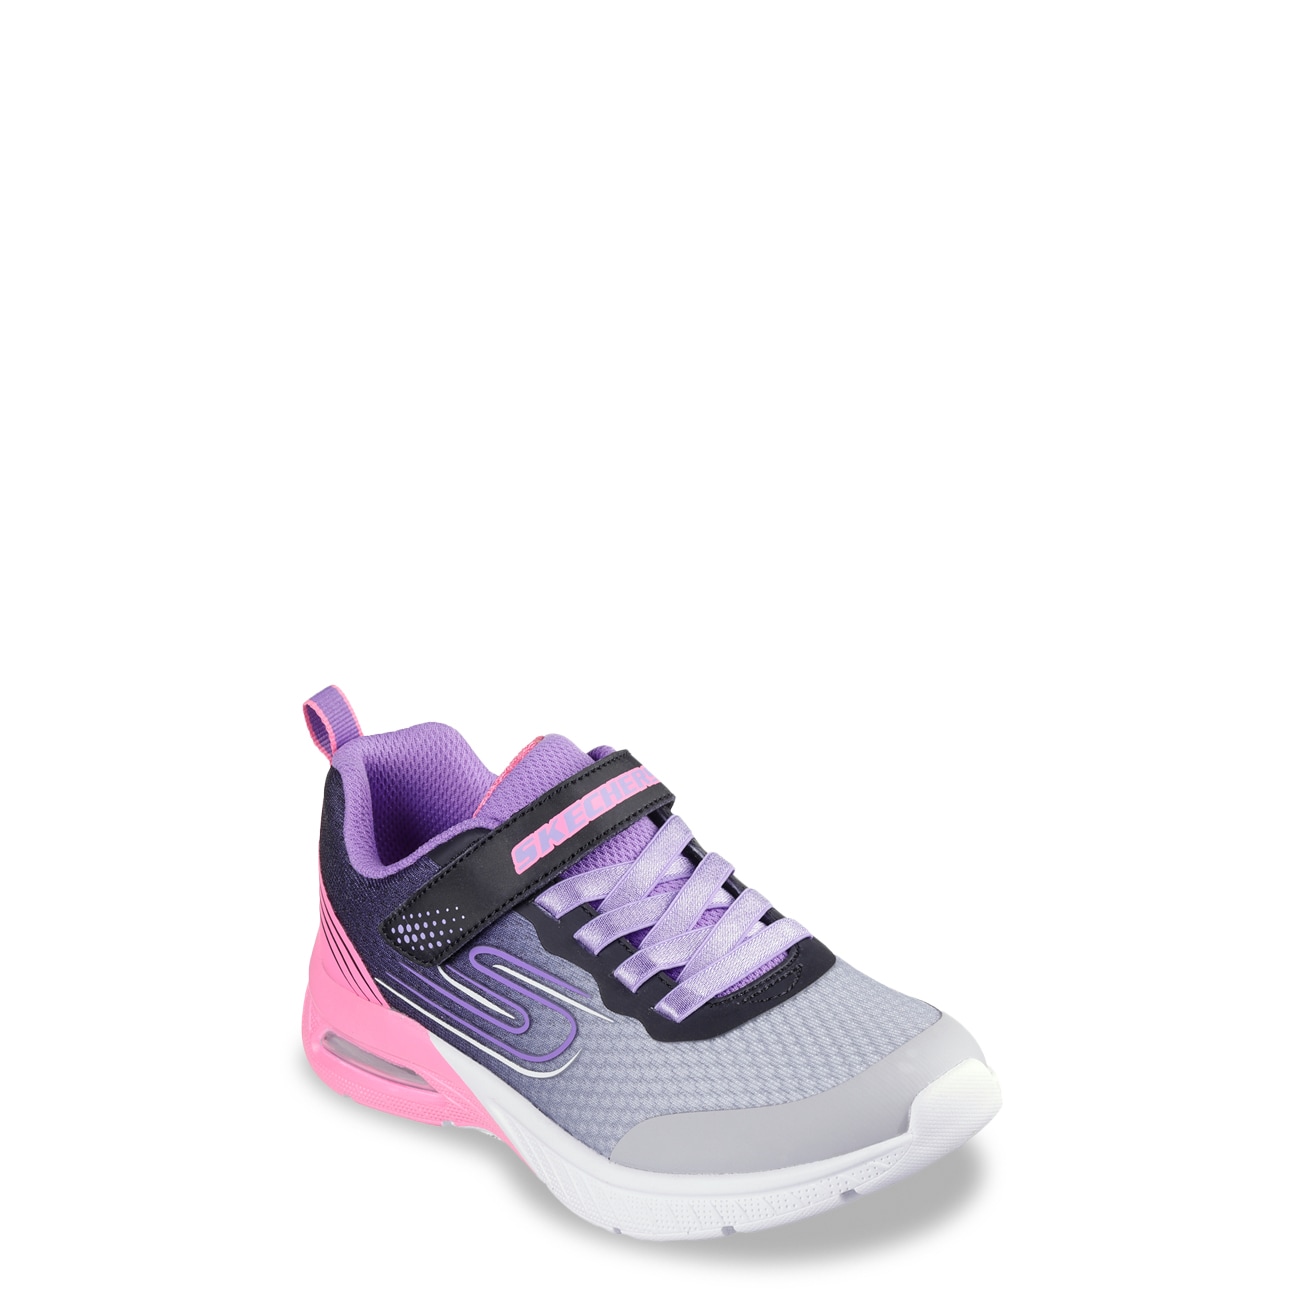 Youth Girls' Microspec Max Plus Echo Sprint Running Shoe